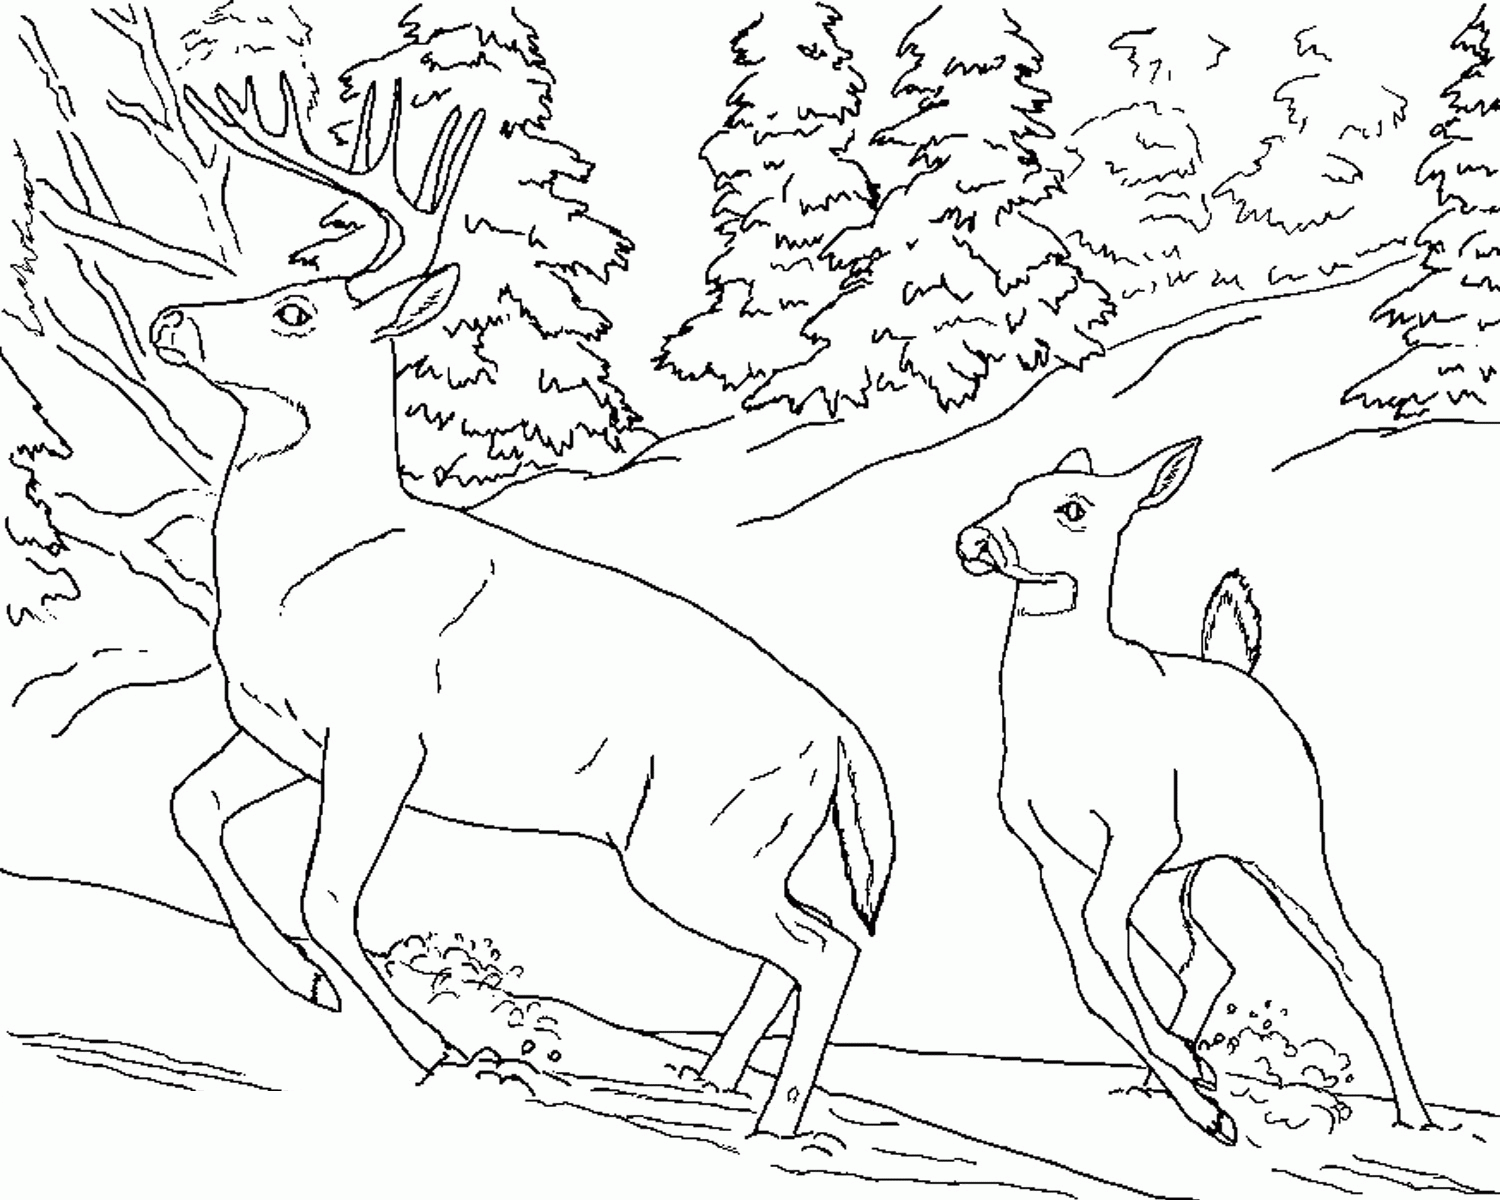 Mule Deer Coloring Page - Coloring Home